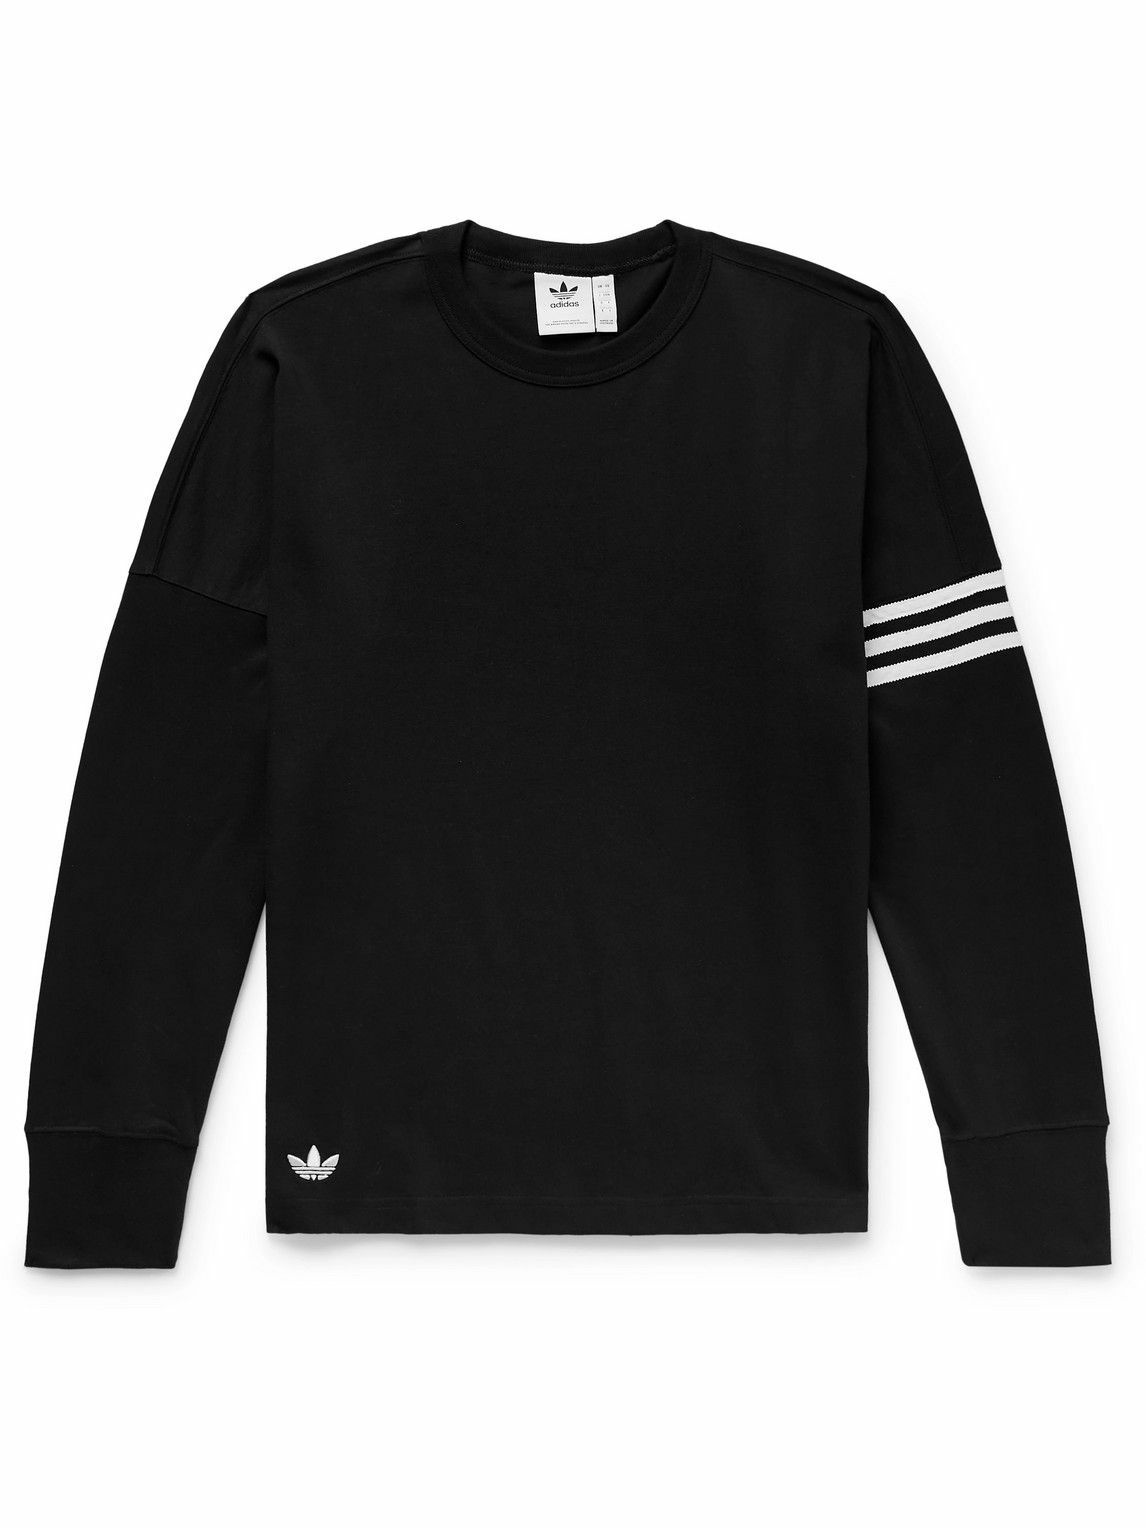 adidas Originals - Grosgrain-Trimmed Cotton-Jersey - Originals Black adidas Logo-Embroidered Sweatshirt